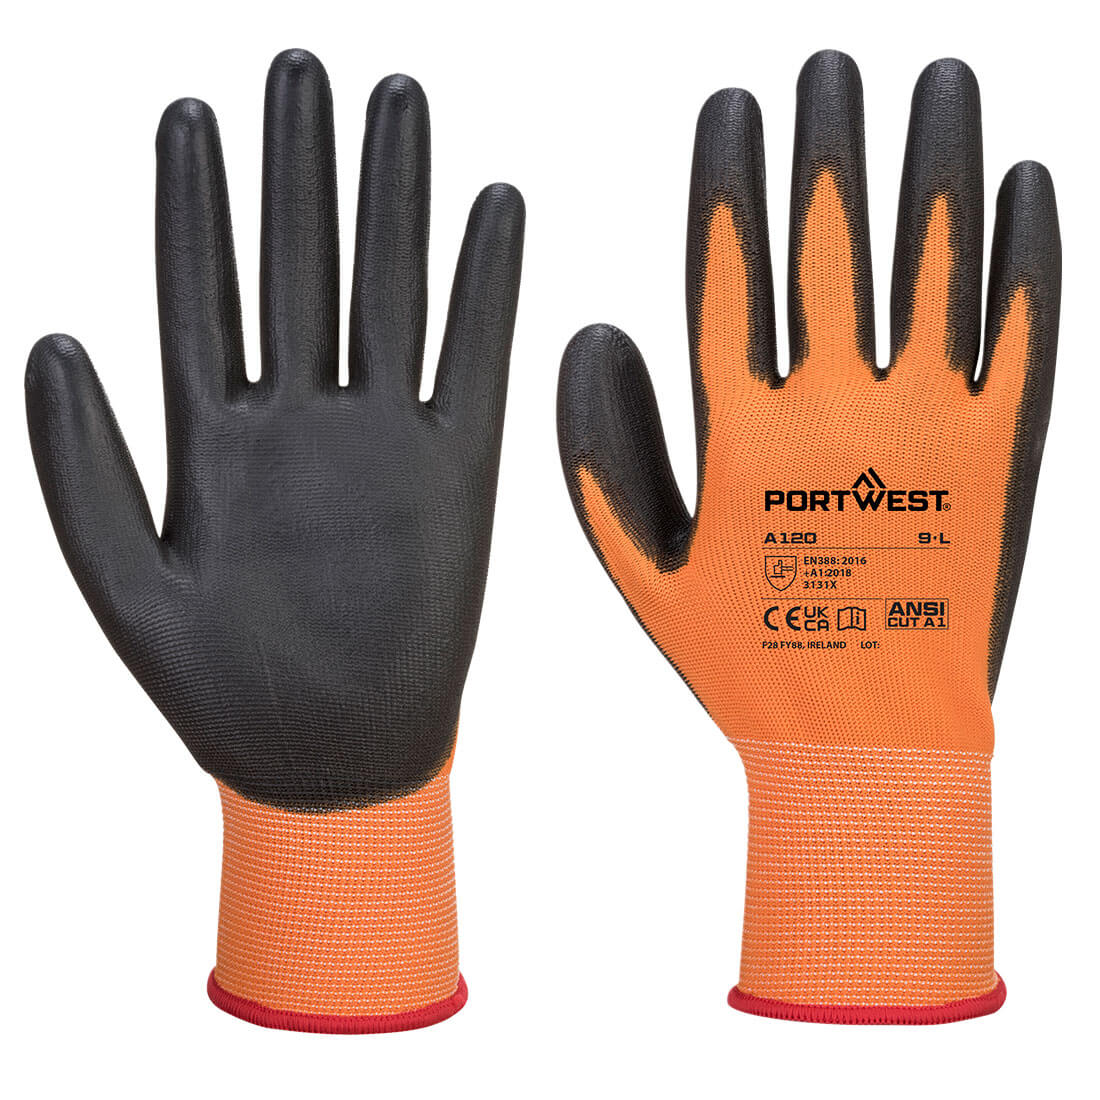 Portwest A120 PU Palm Glove for General Handling